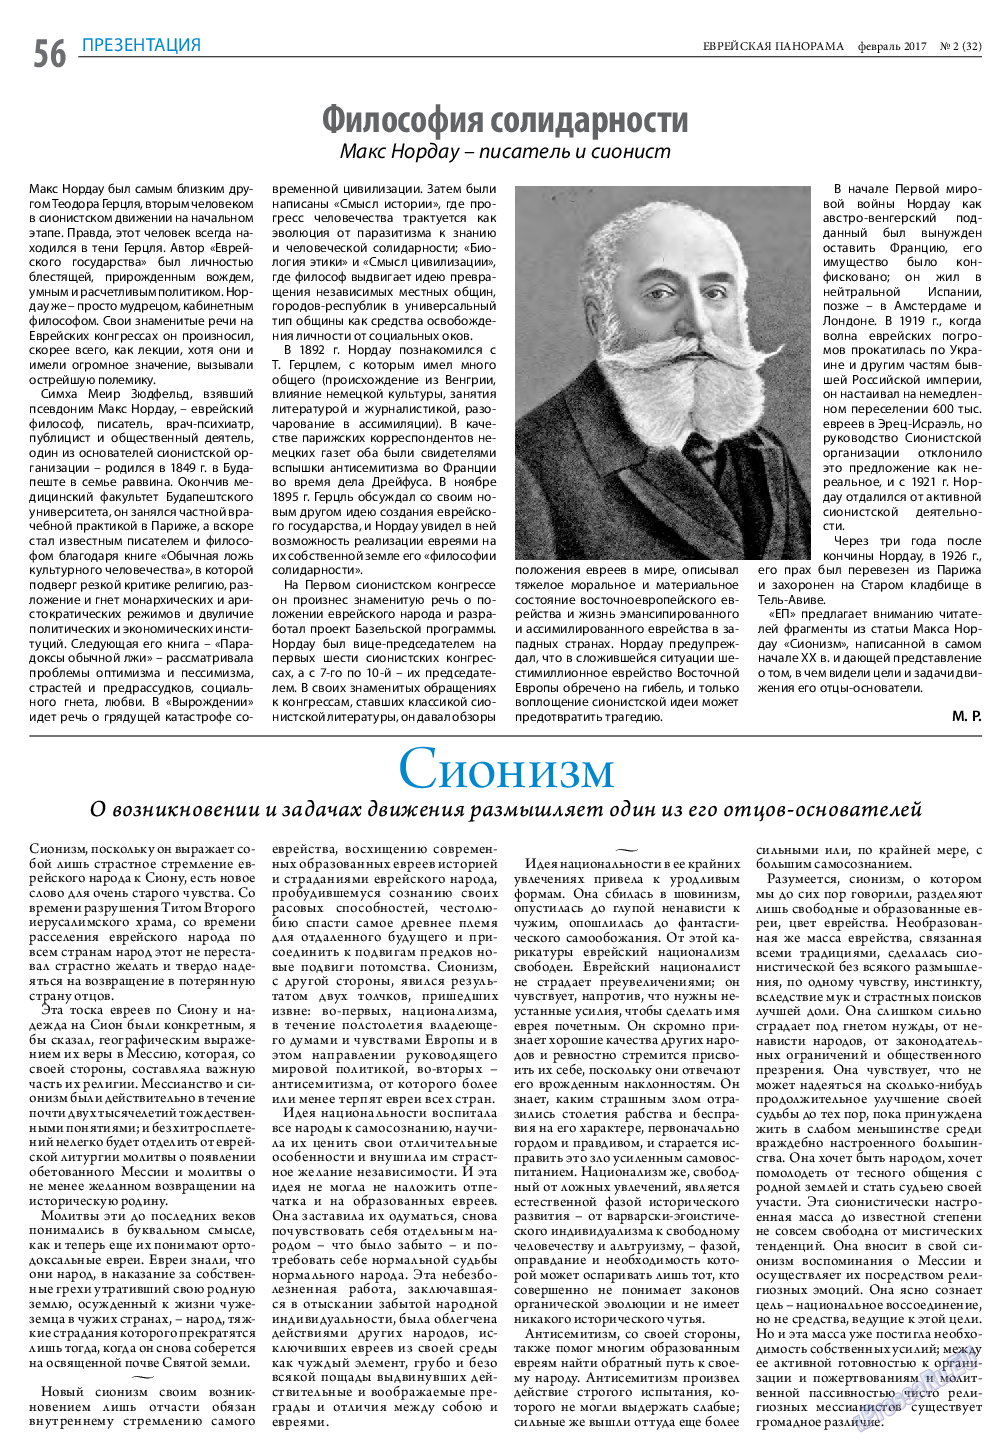 Еврейская панорама, газета. 2017 №2 стр.56